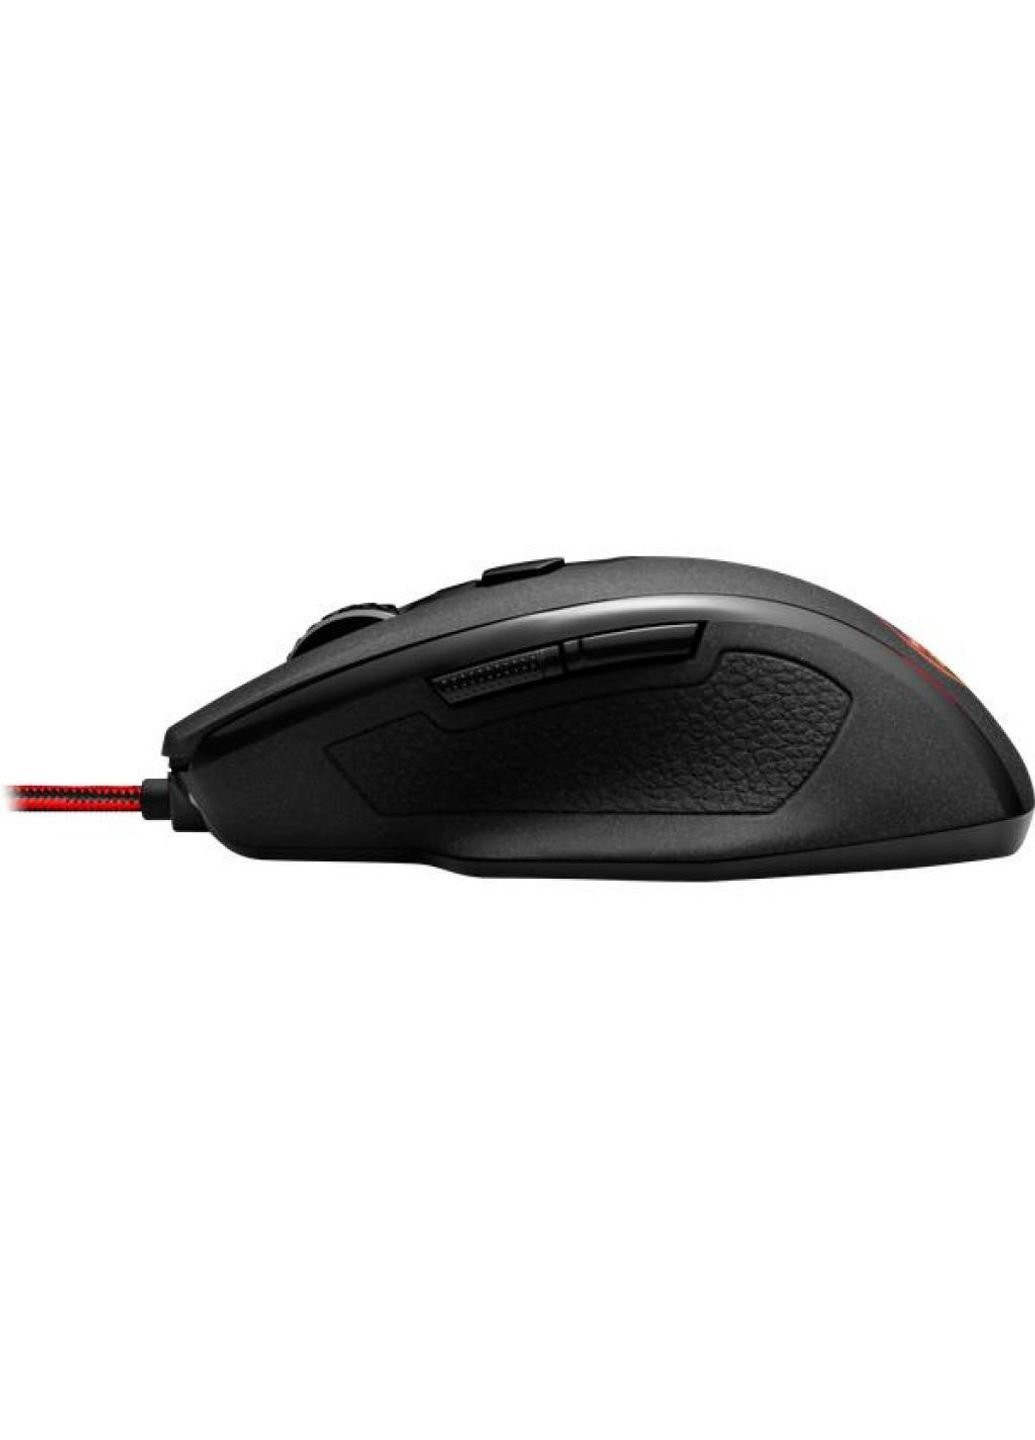 Мышка Tiger 2 USB Black (77637) Redragon (252632354)